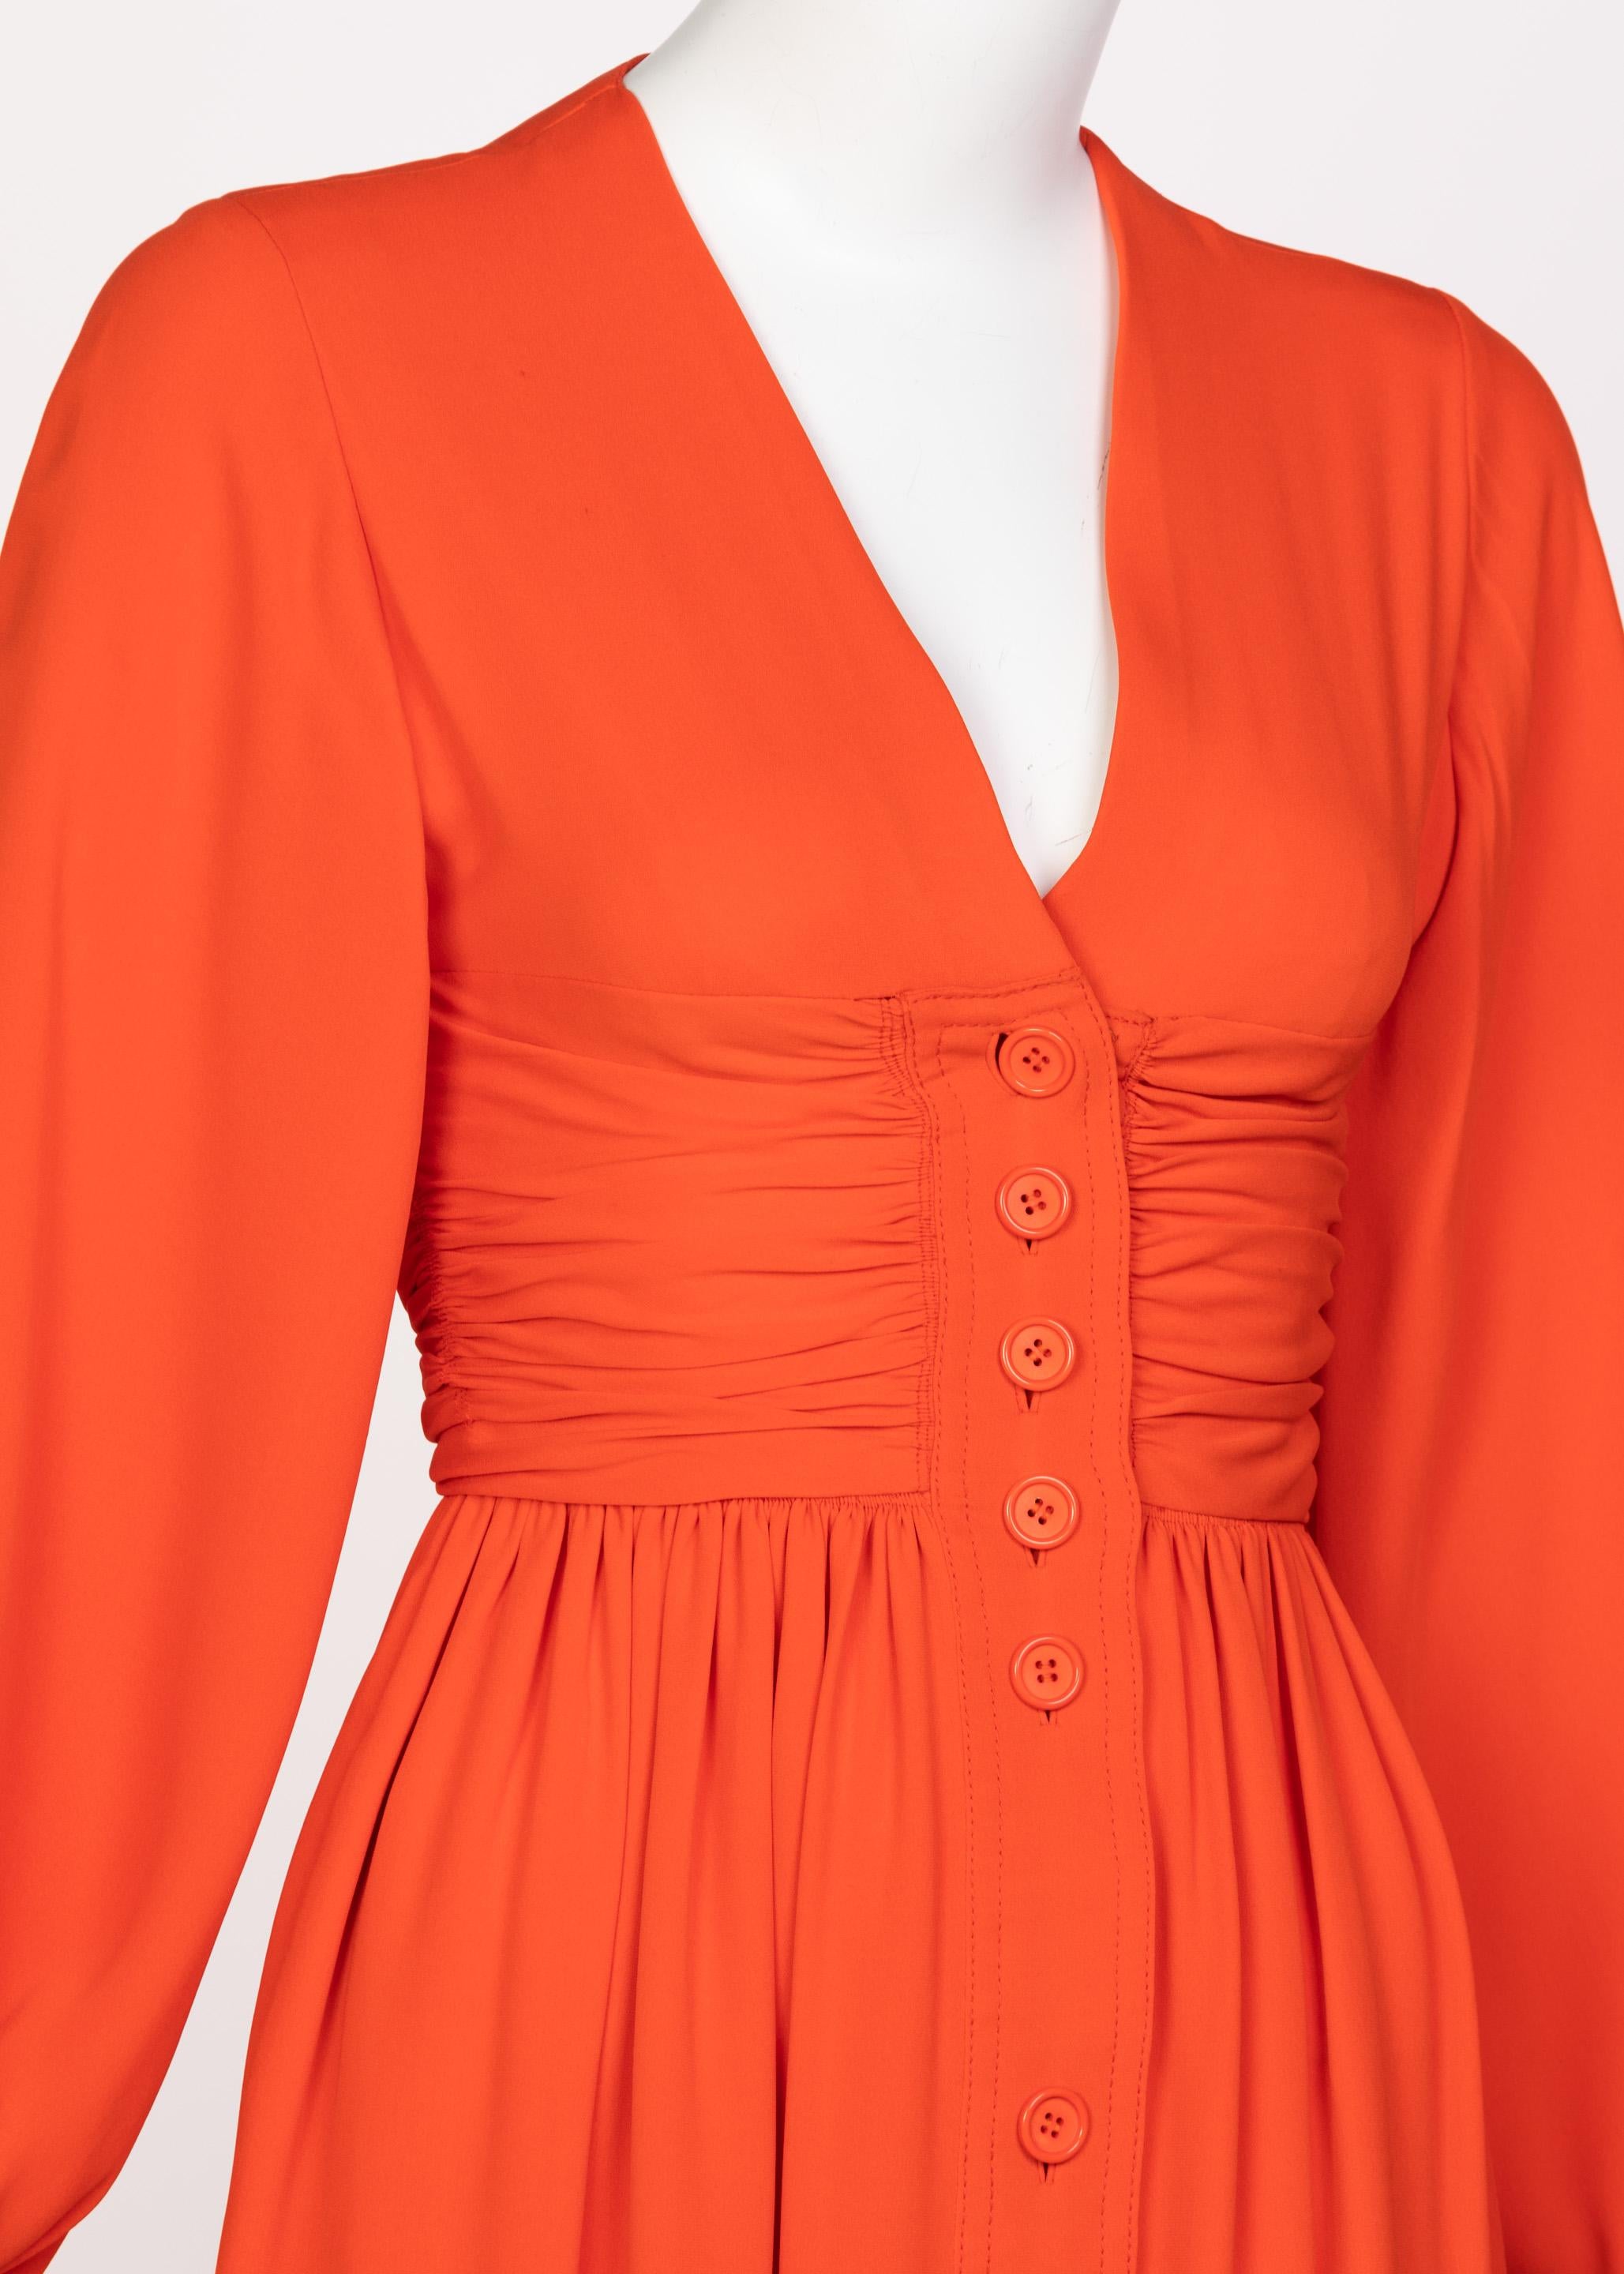 Galanos Orange Silk Plunge Neck Bishop Sleeve Dress, 1970s For Sale 2